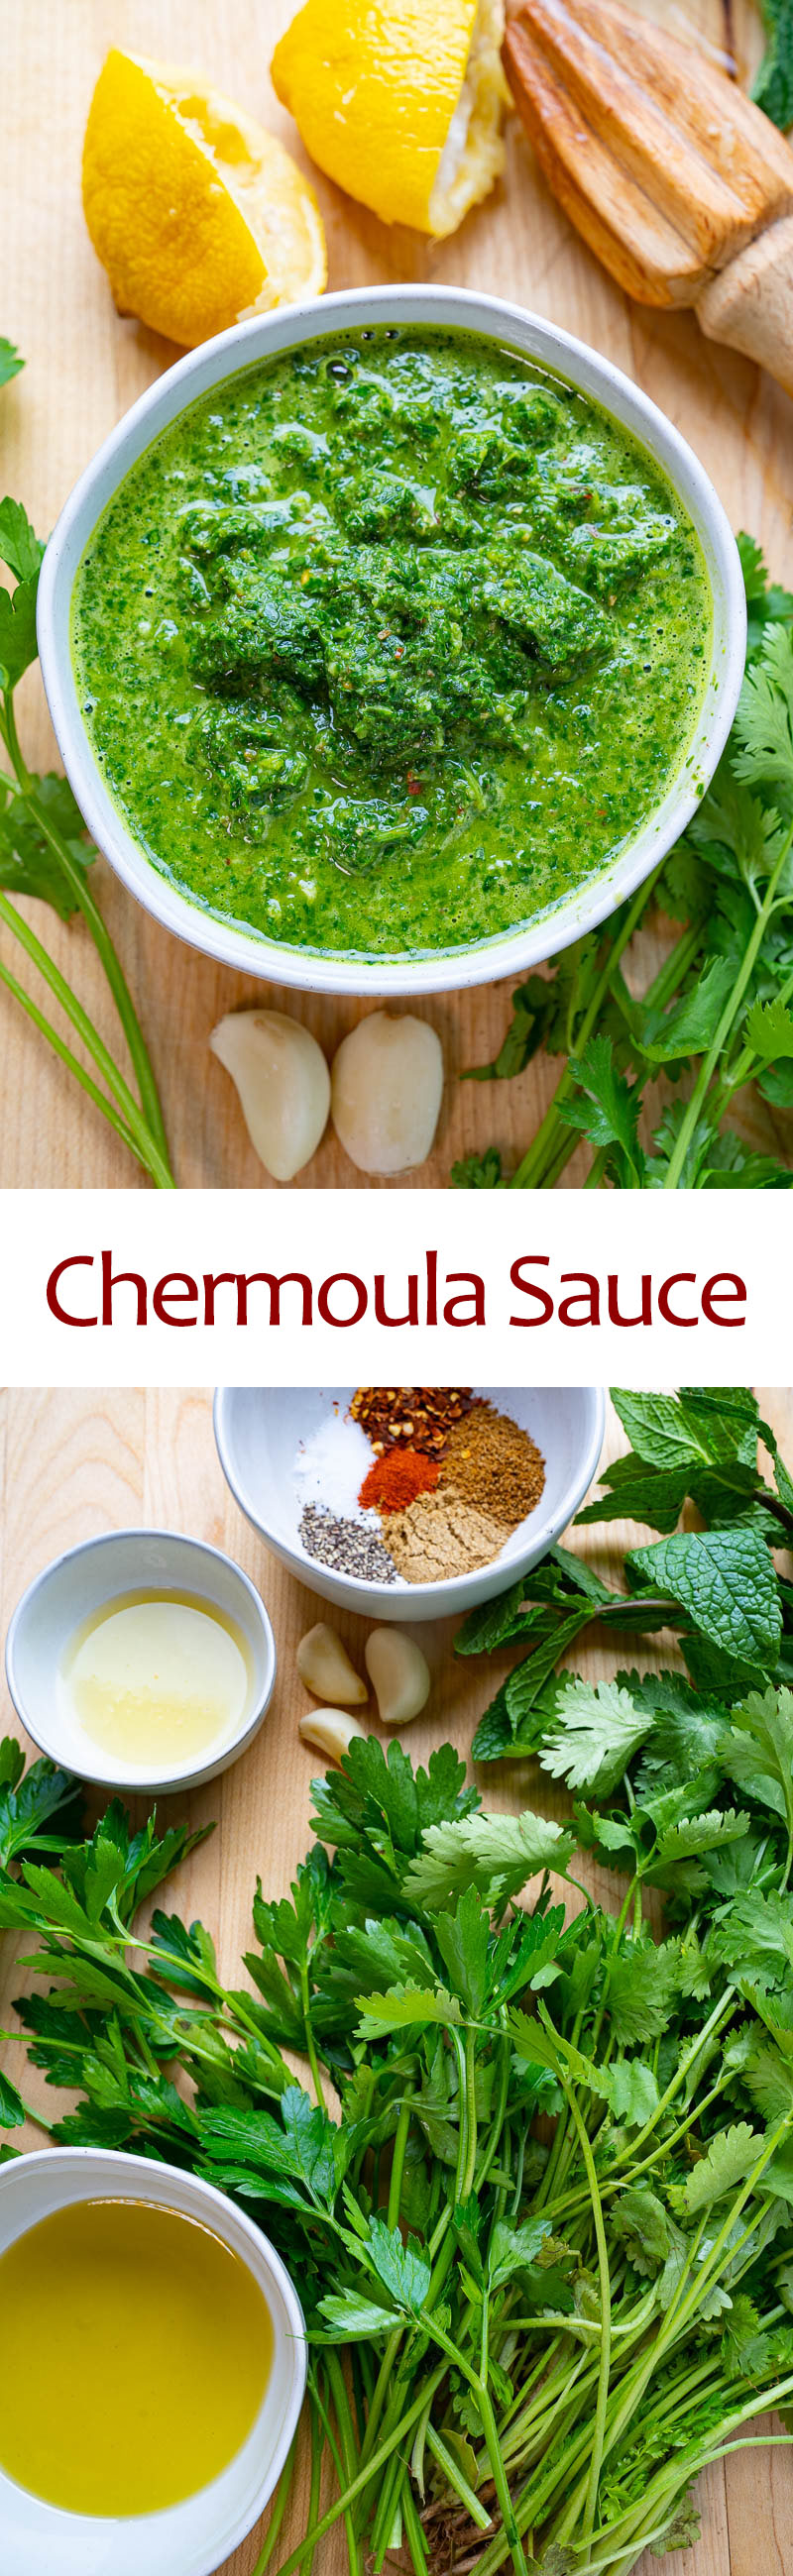 Chermoula Sauce